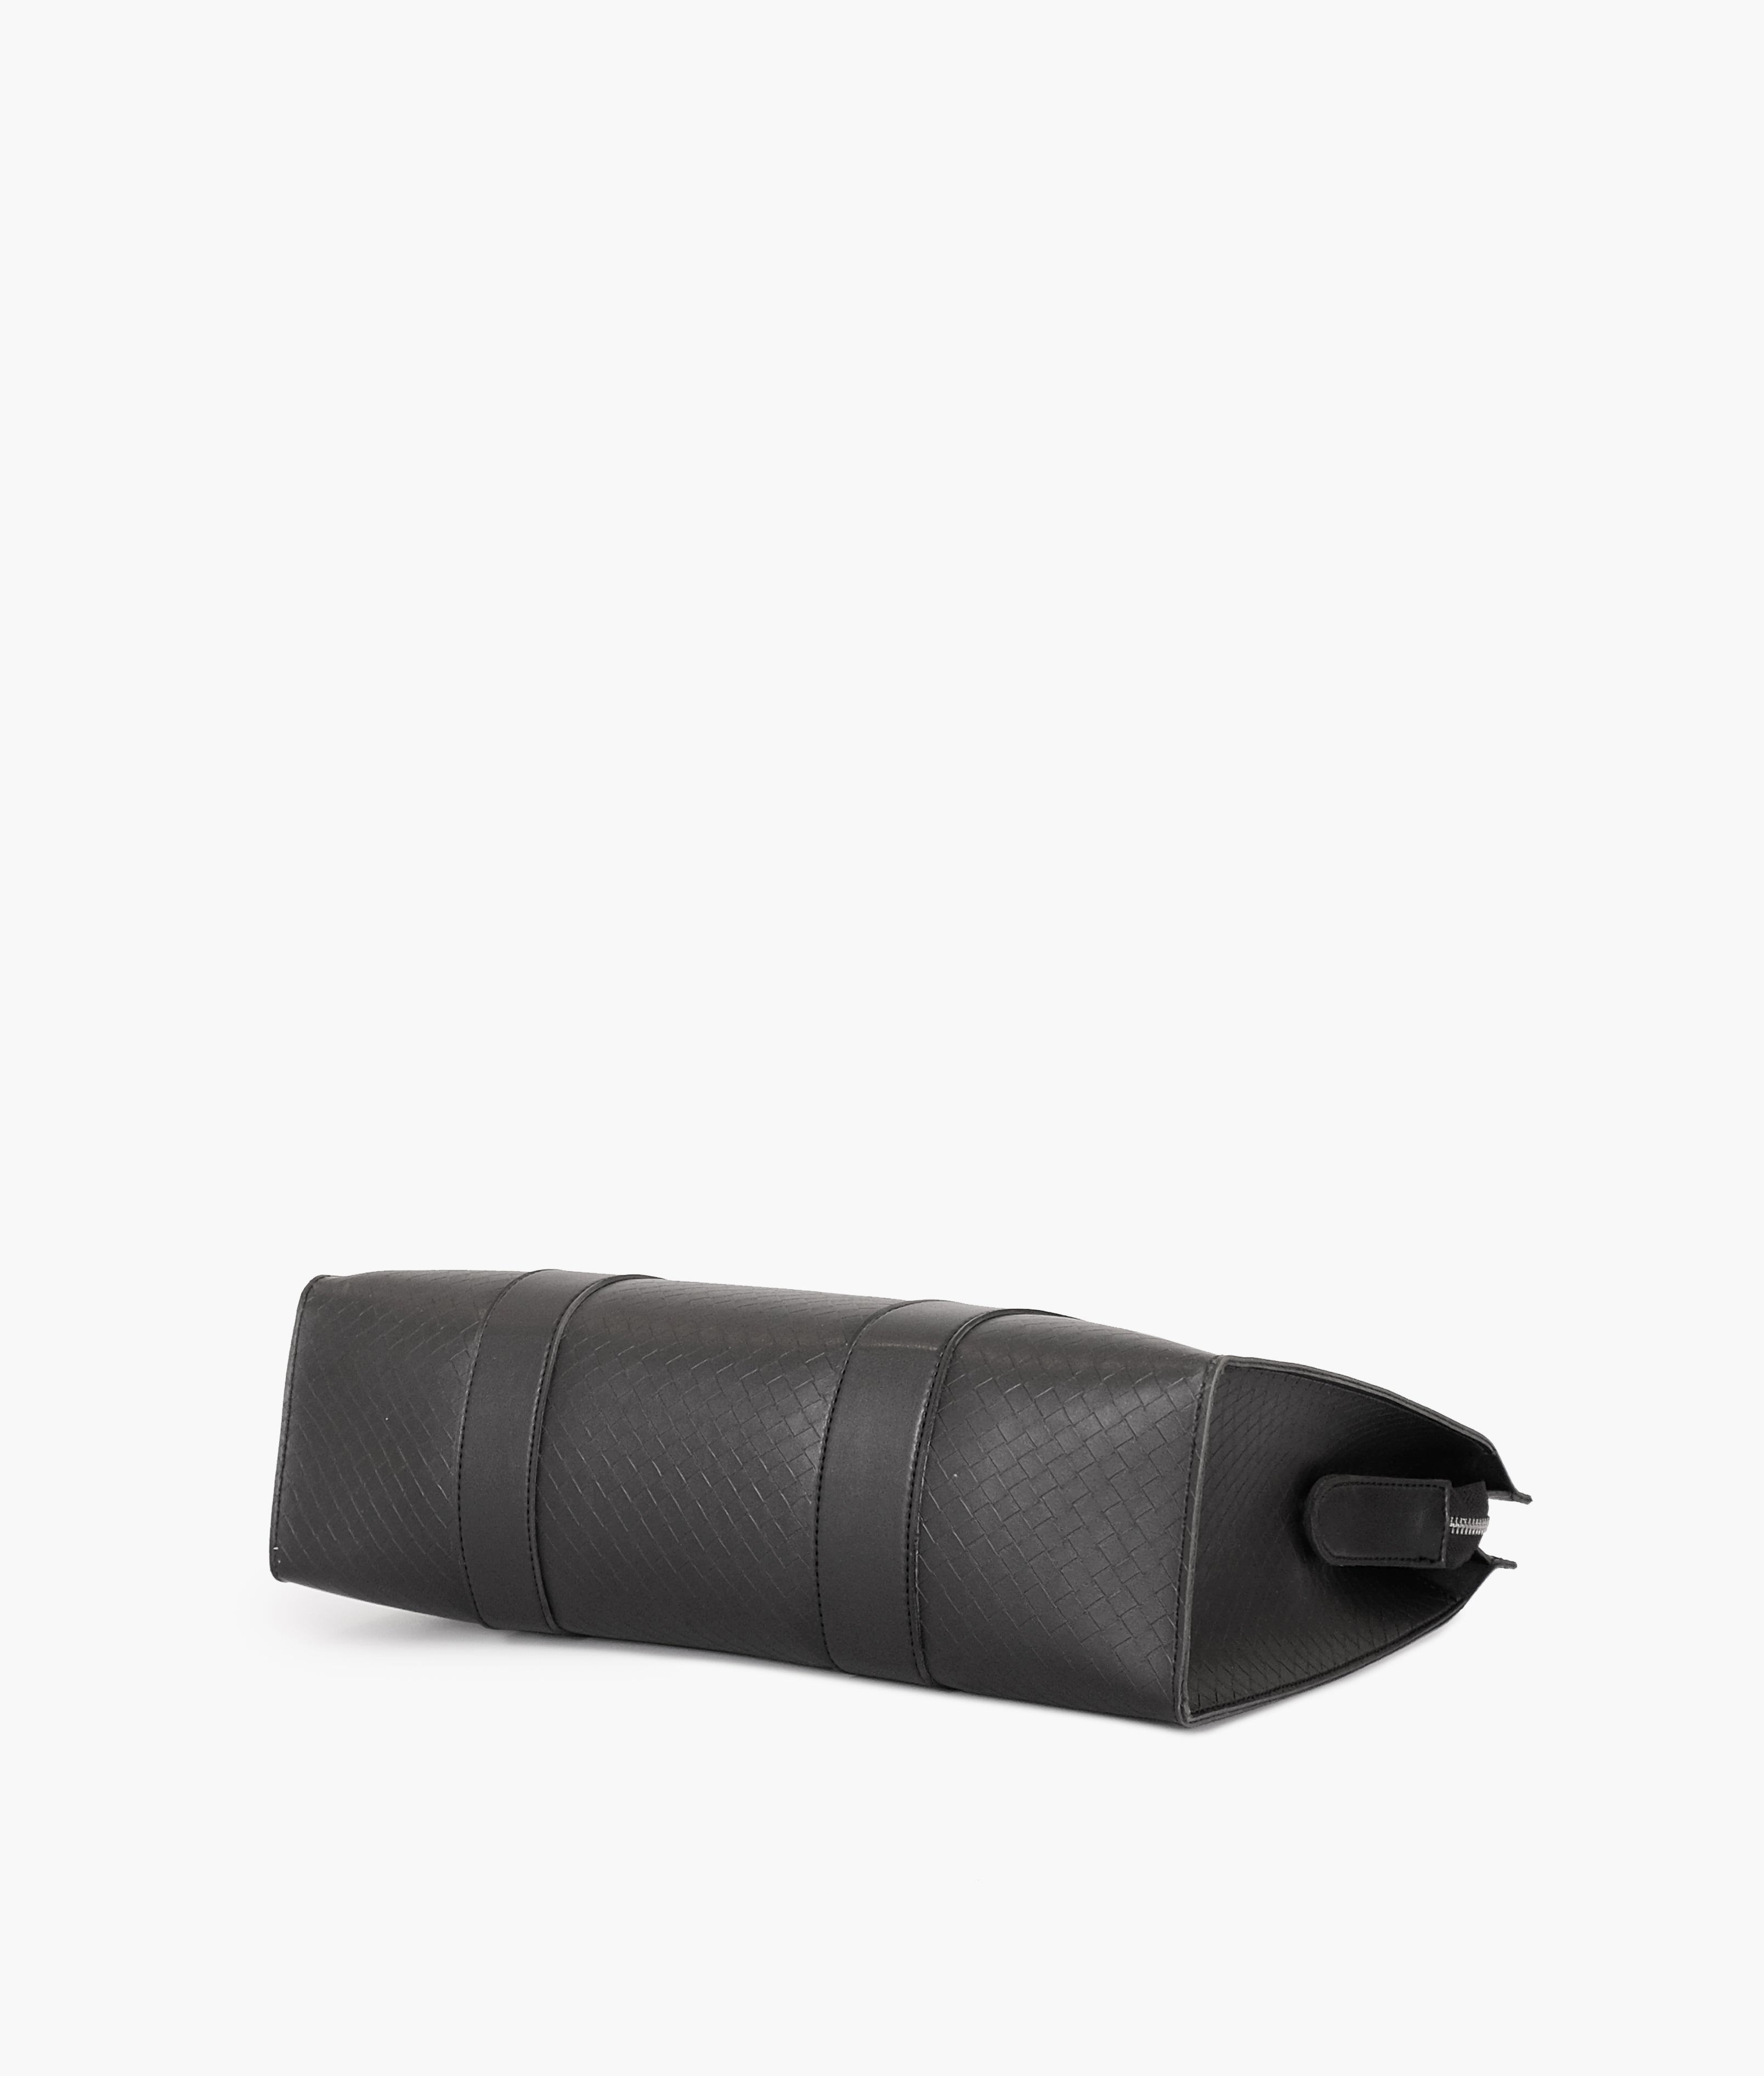 Black weaved laptop bag with sleeve